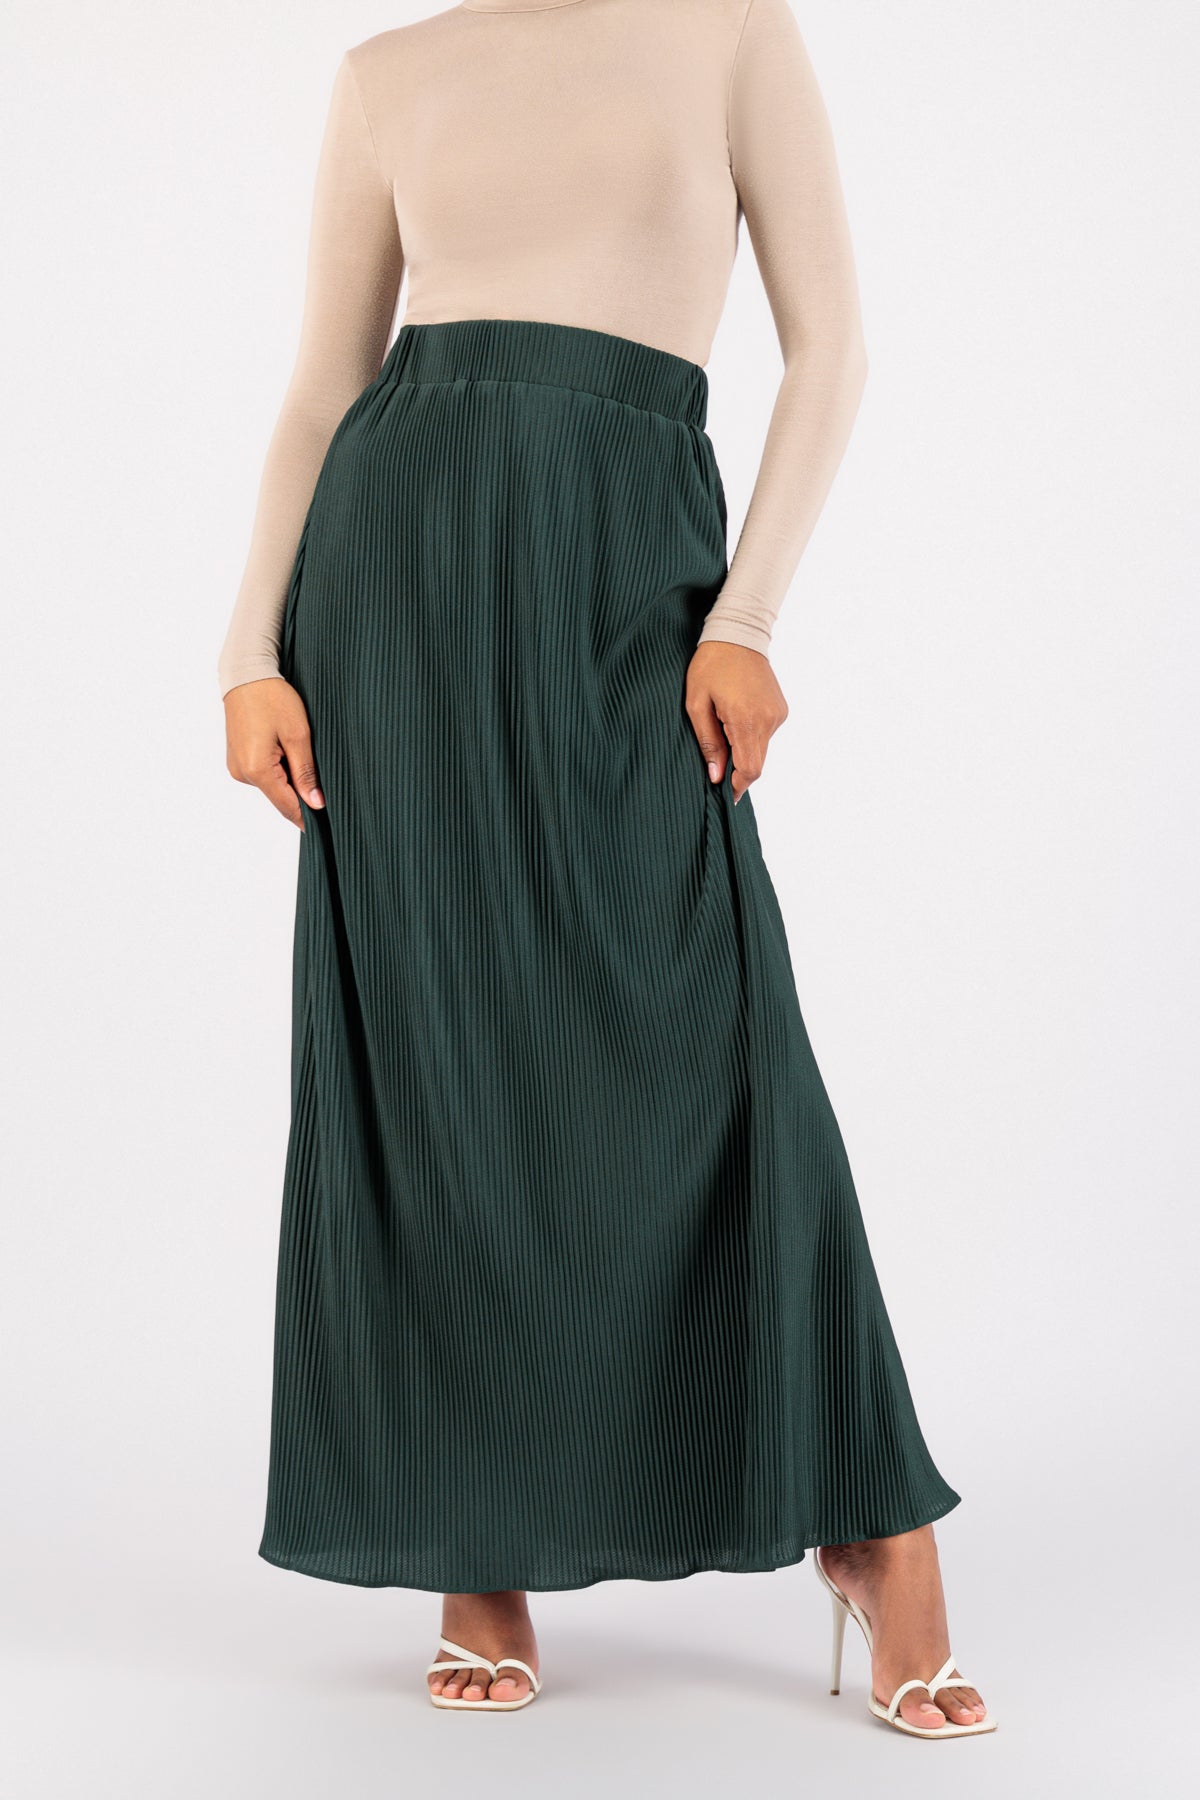 US - Pleated Flowy Skirt - Emerald